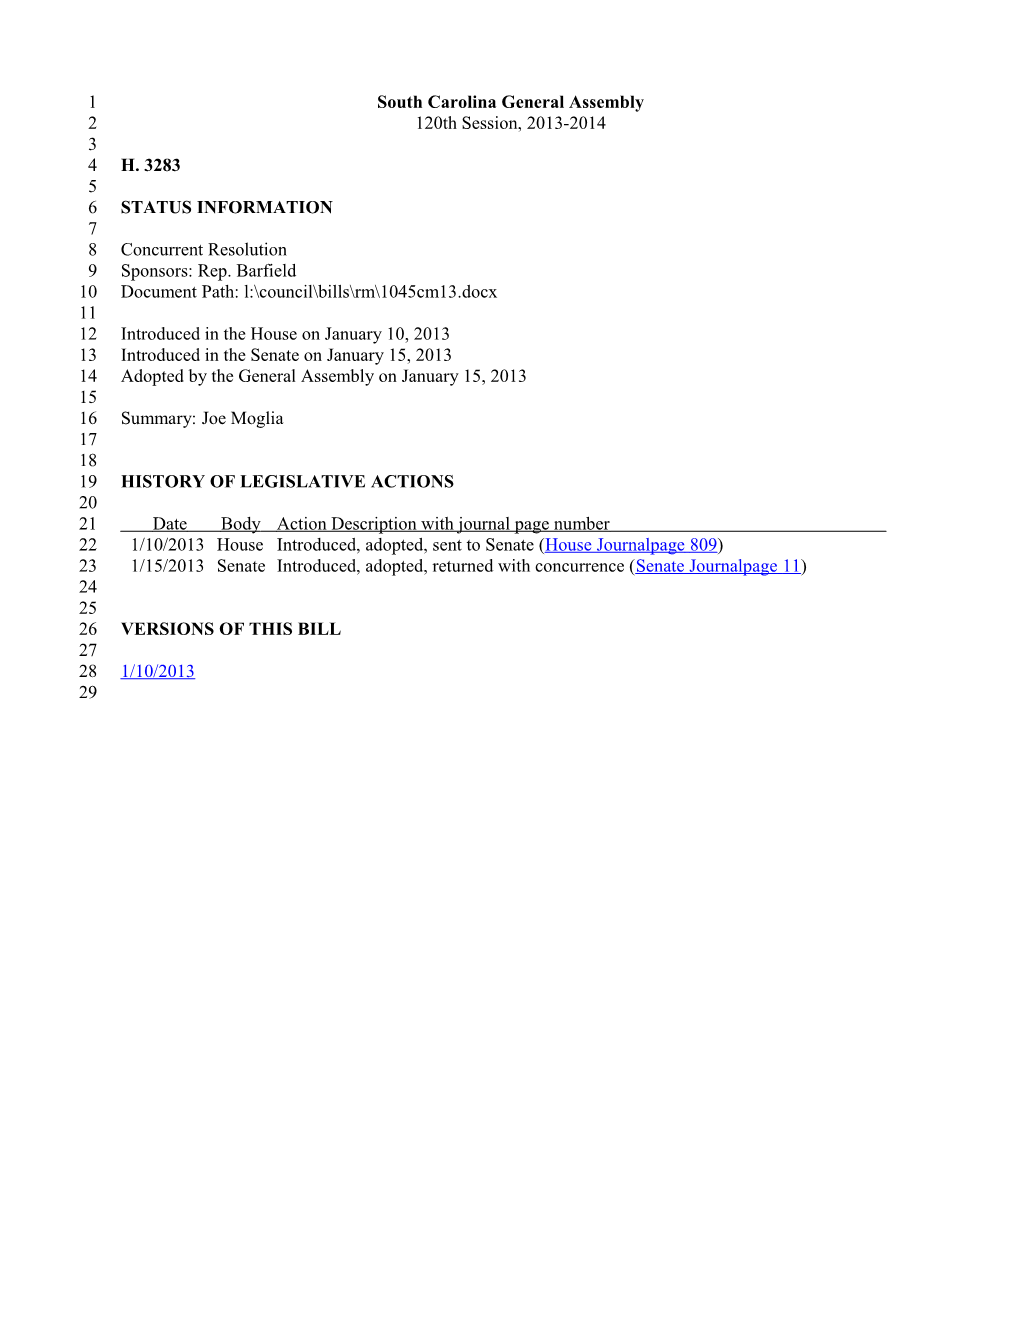 2013-2014 Bill 3283: Joe Moglia - South Carolina Legislature Online